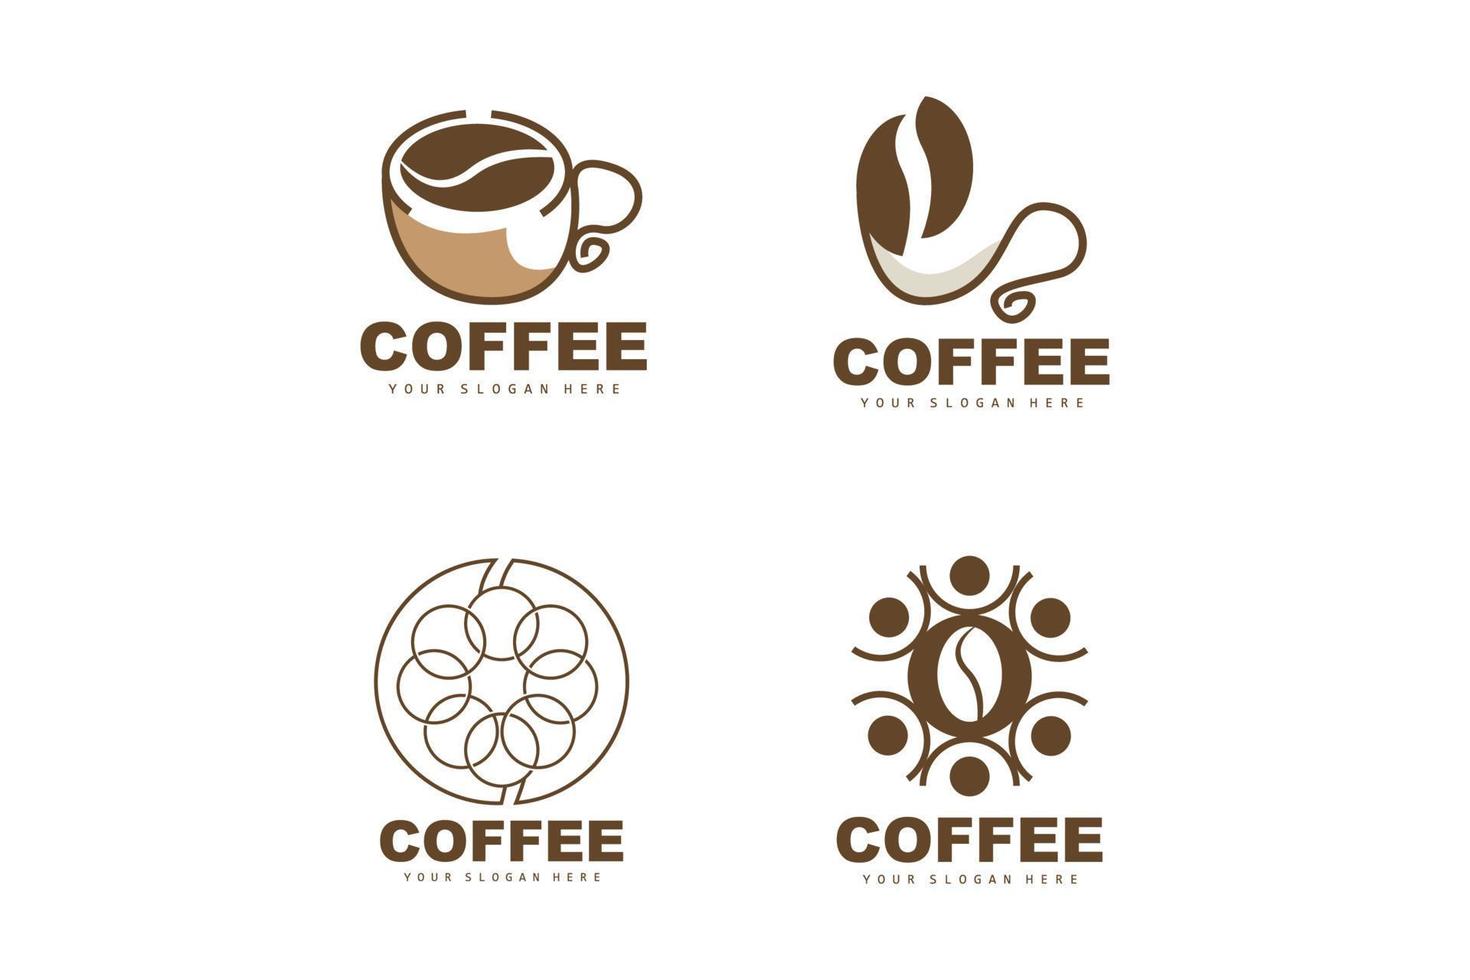 coffee bean drink logo design in brown color vector illustration